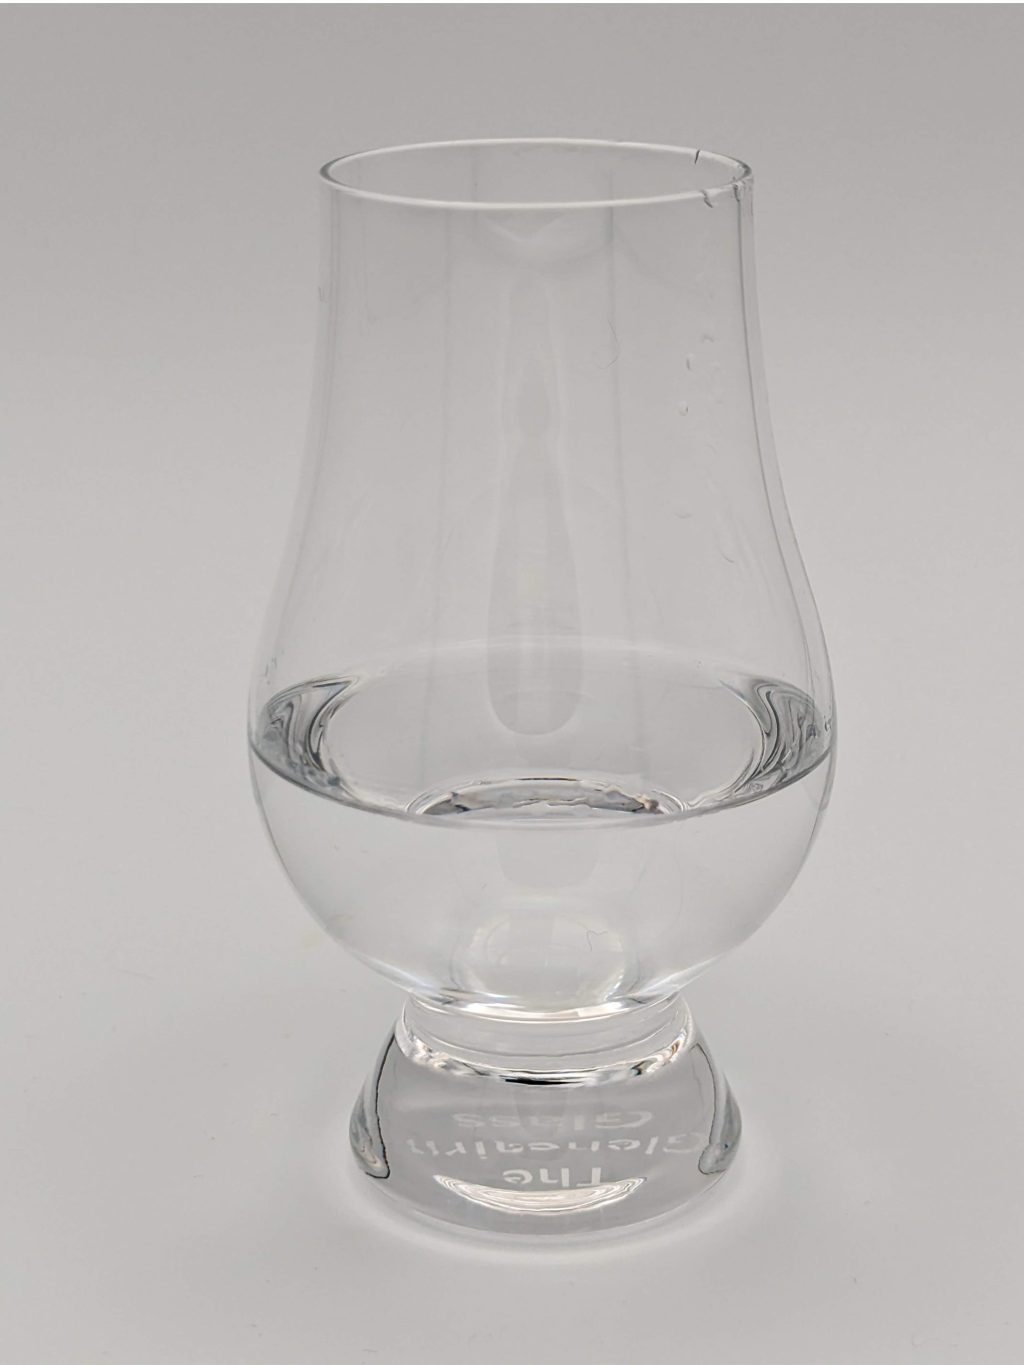 clear liquid in a glencairn glass